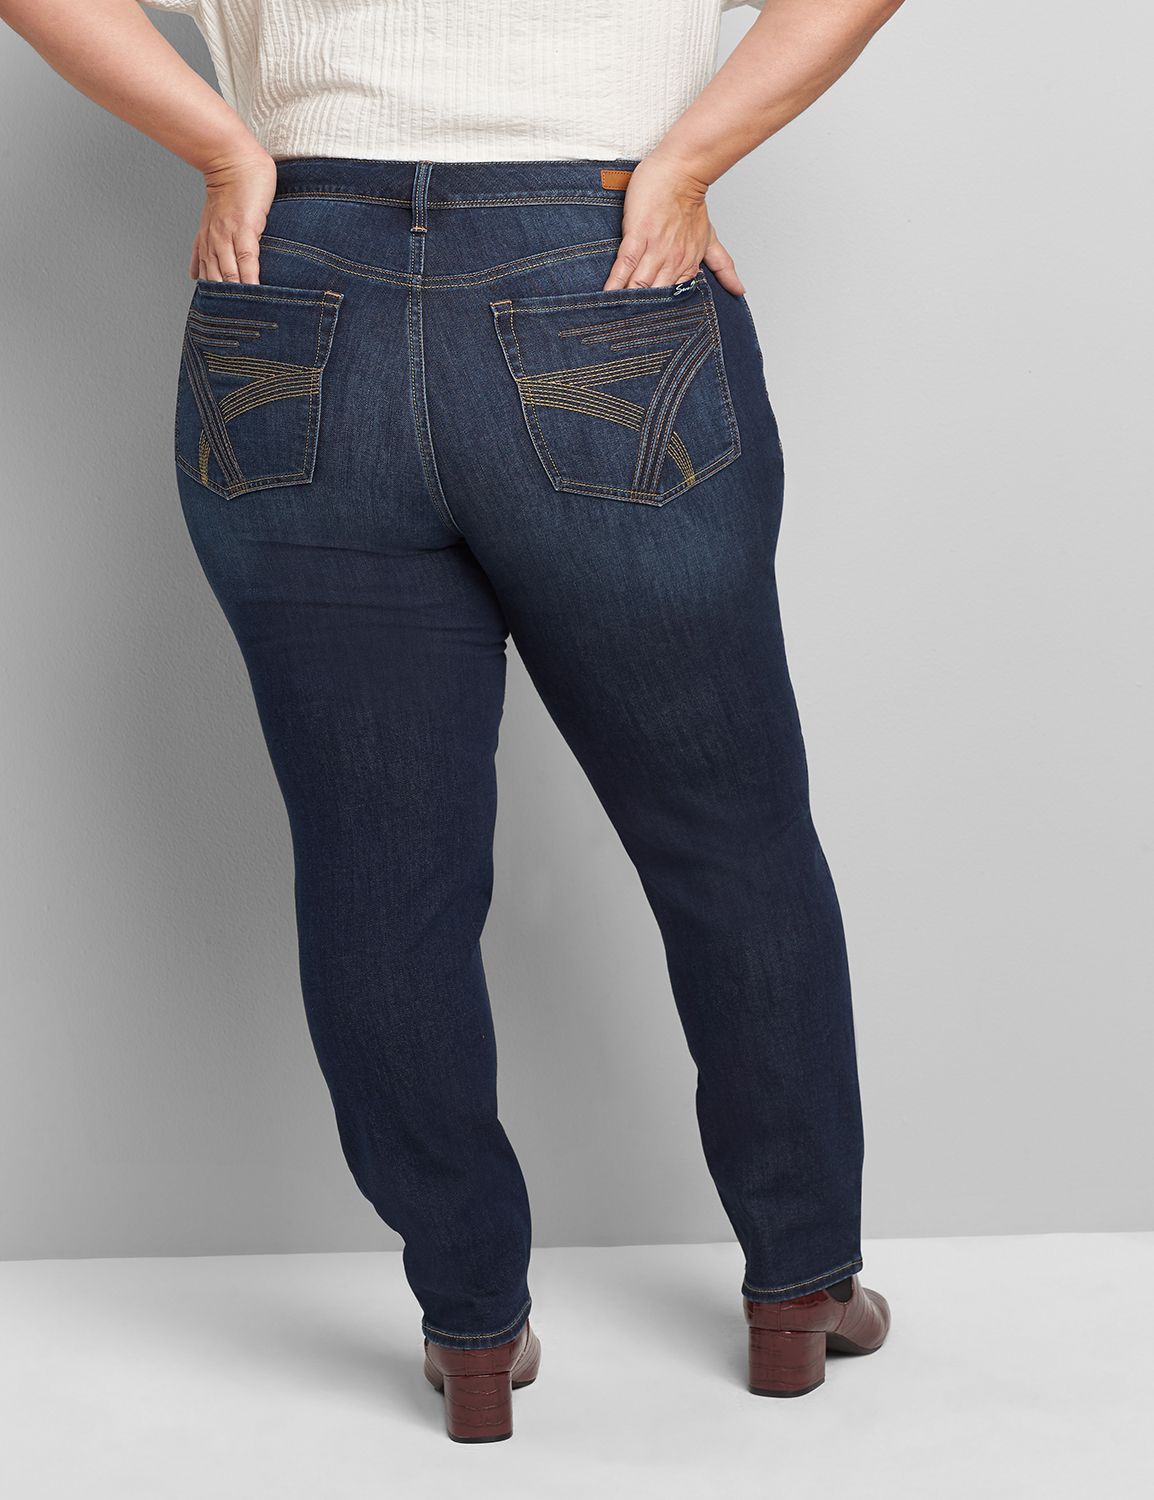 size 18 jeans